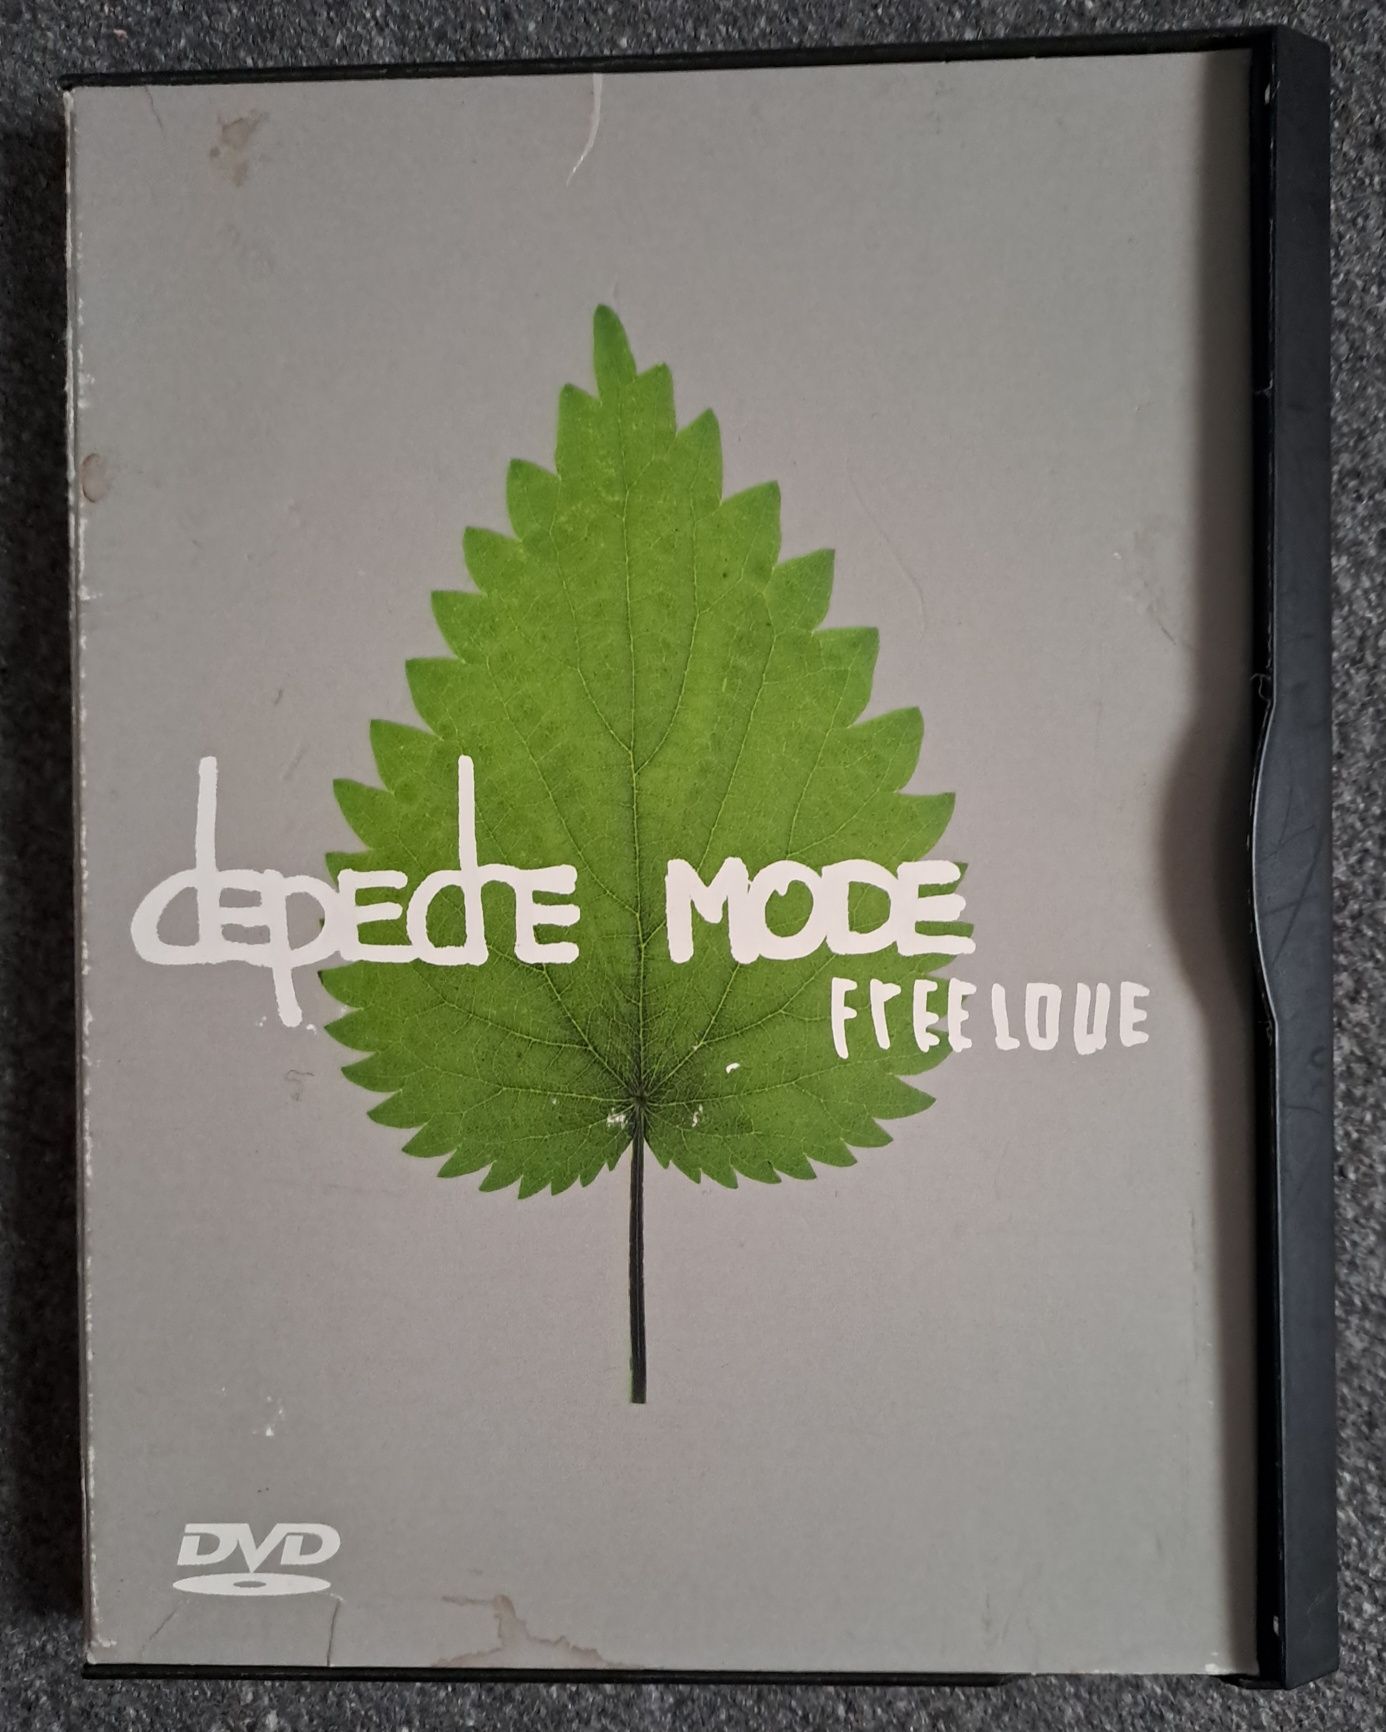 Depeche Mode FreeLove DVD US